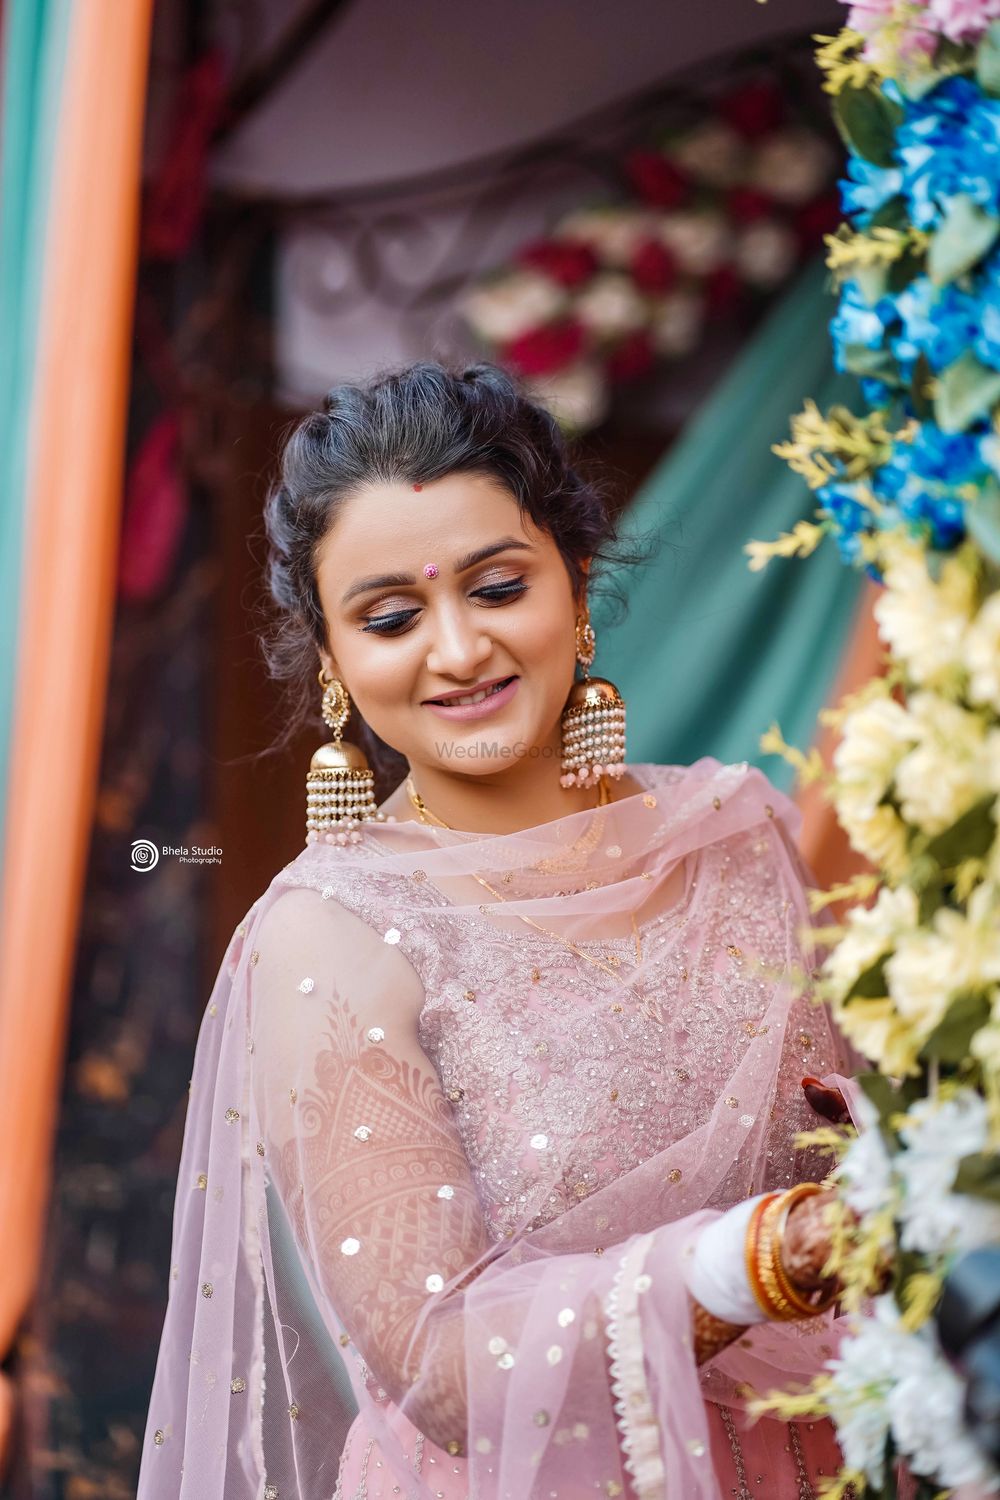 Photo From Girls wedding shots - By Bhela Studio Photography